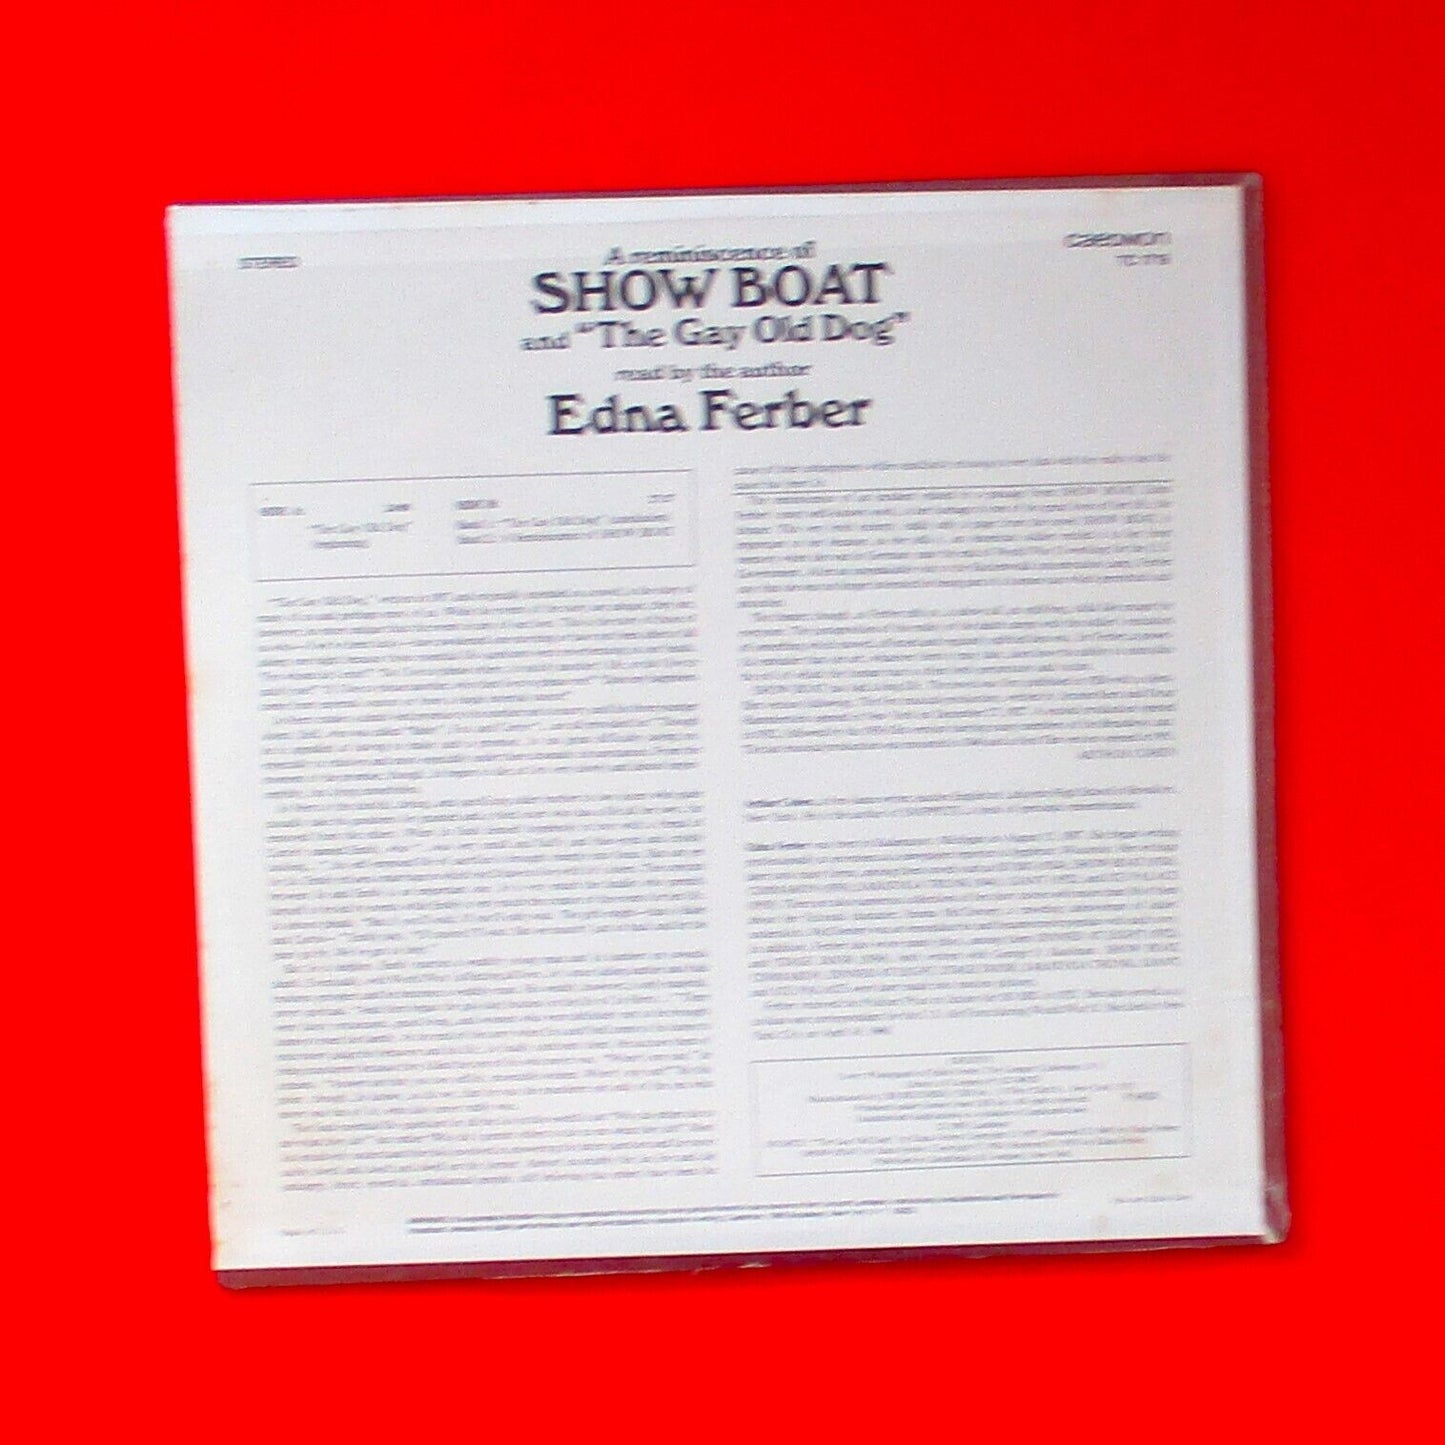 Edna Ferber Reminiscence of Show Boat & the Gay Old Dog Vinyl LP Sealed 1953